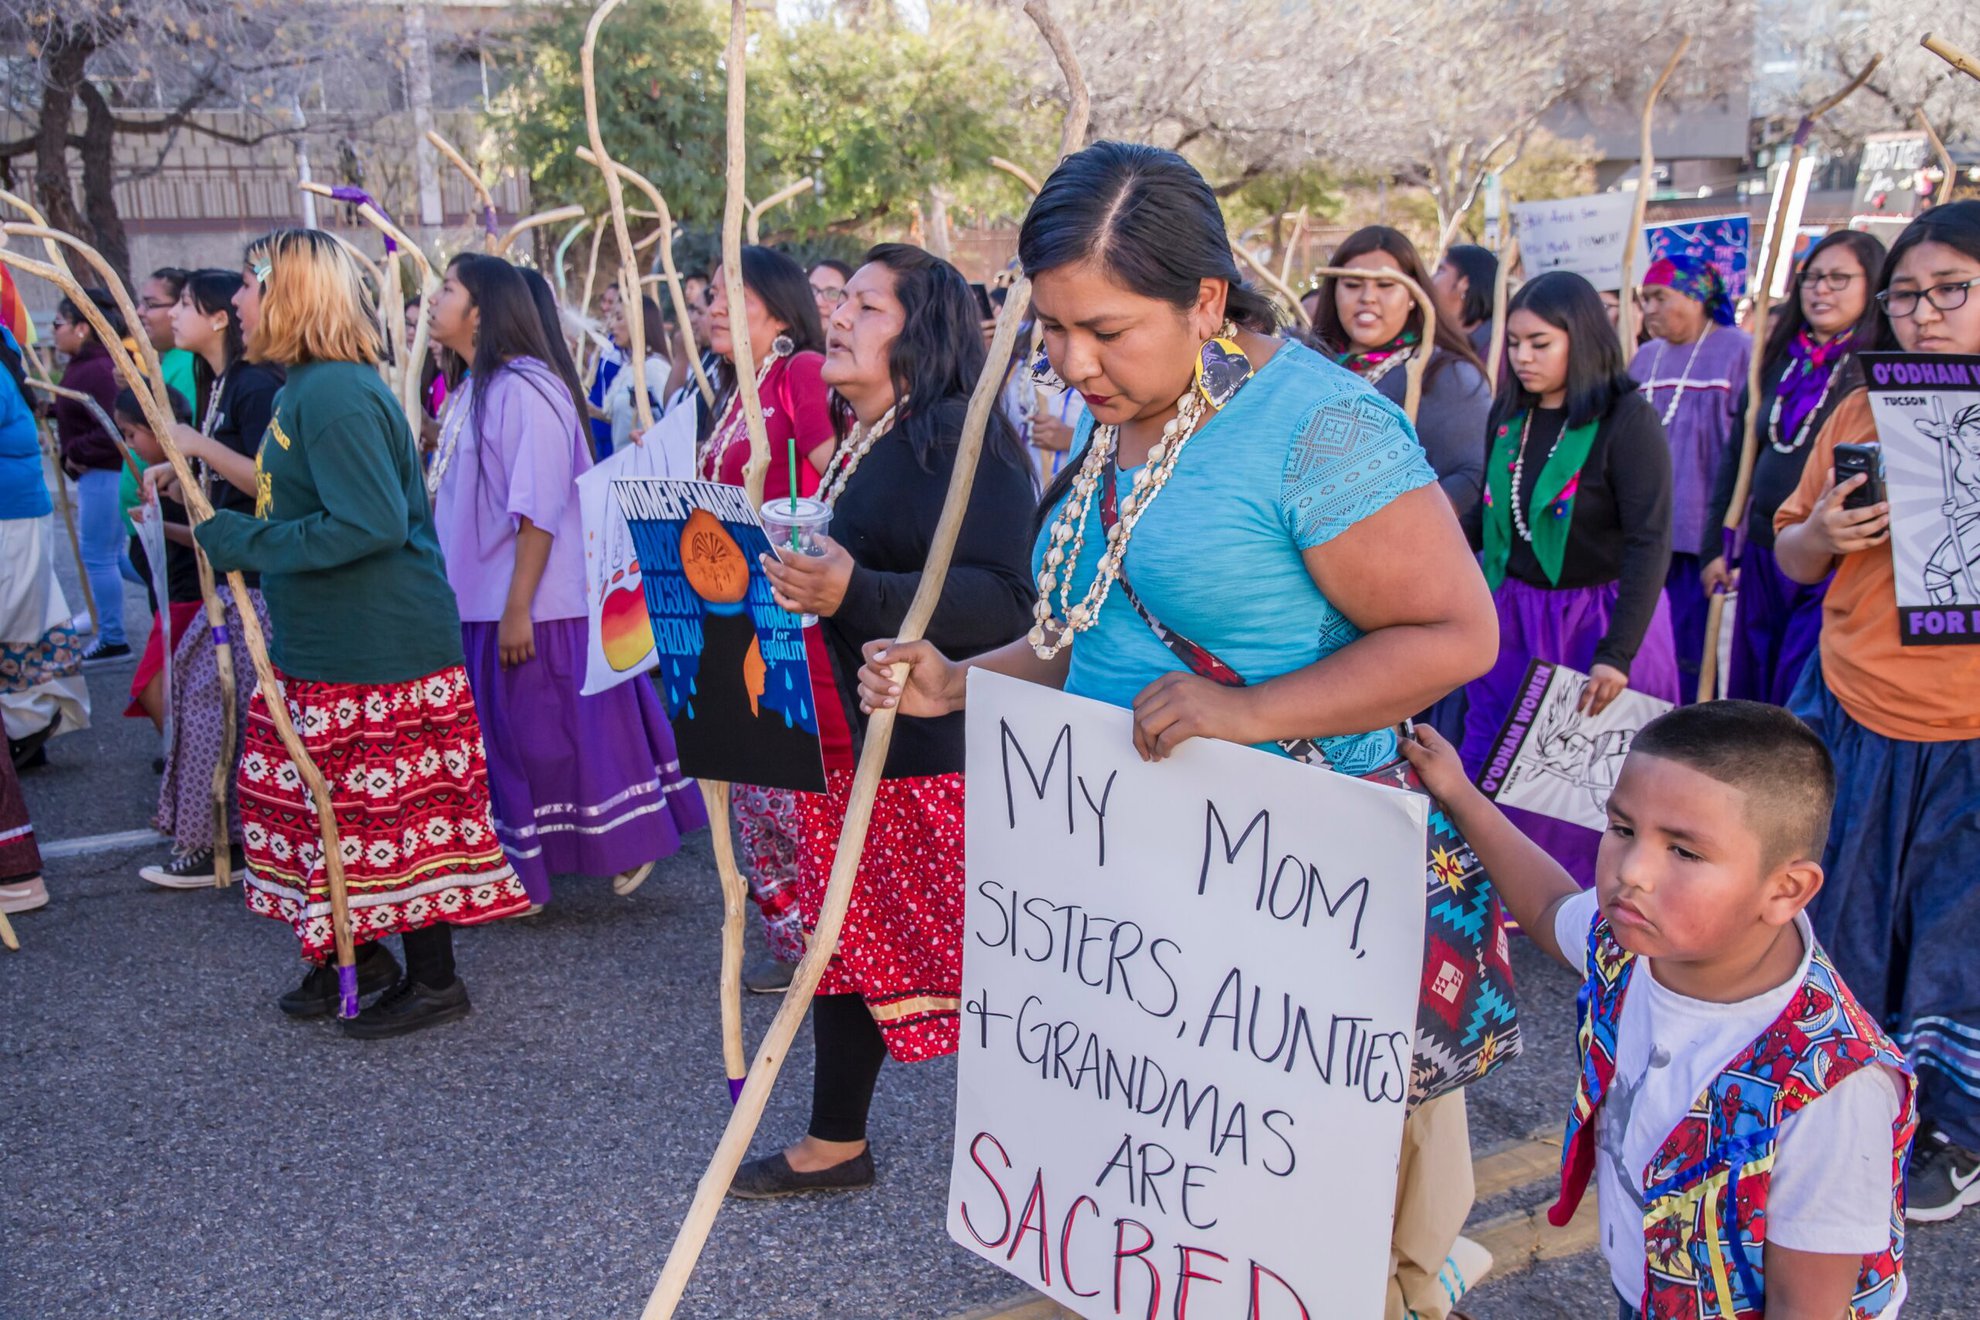 Tohono O'odham women in the Tucson 2019 Women's March. (Credit: Dulcey Lima via Unsplash)